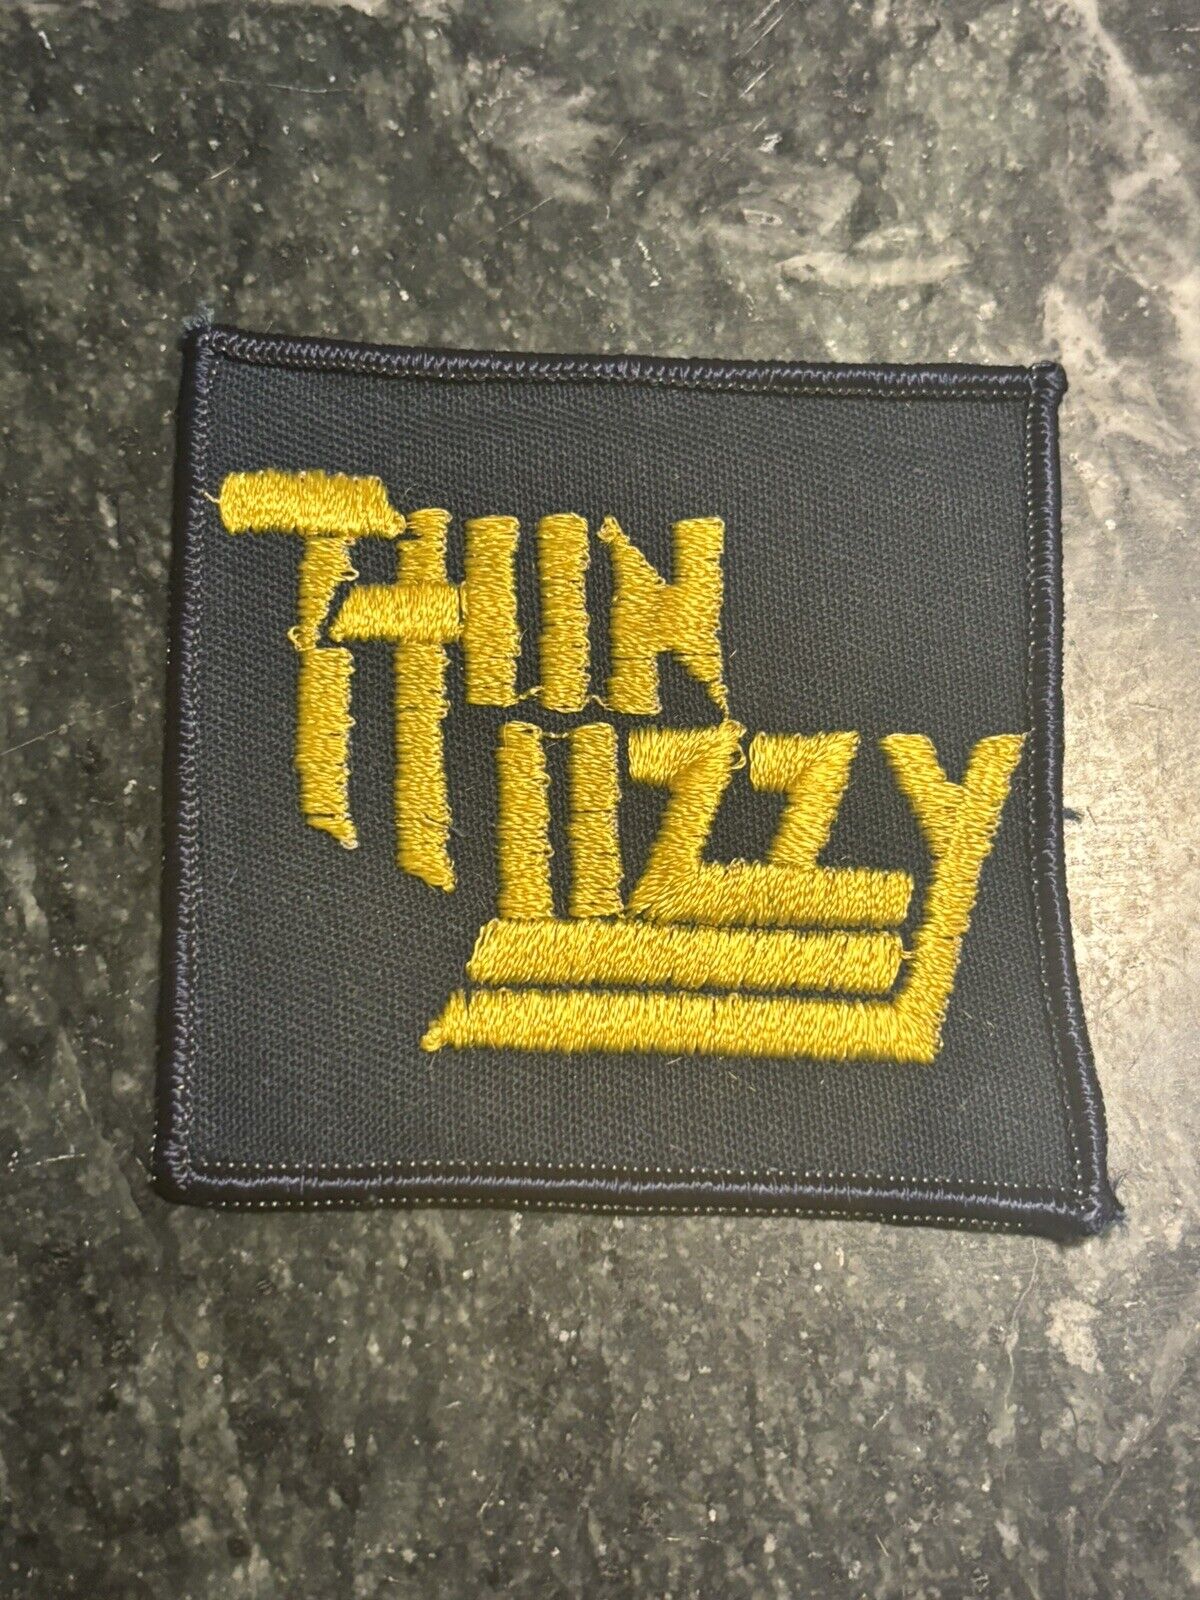 Thin Lizzy 3” Trucker Hat Vtg Rare Jacket Logo Band 70s 80s Rock Iron On